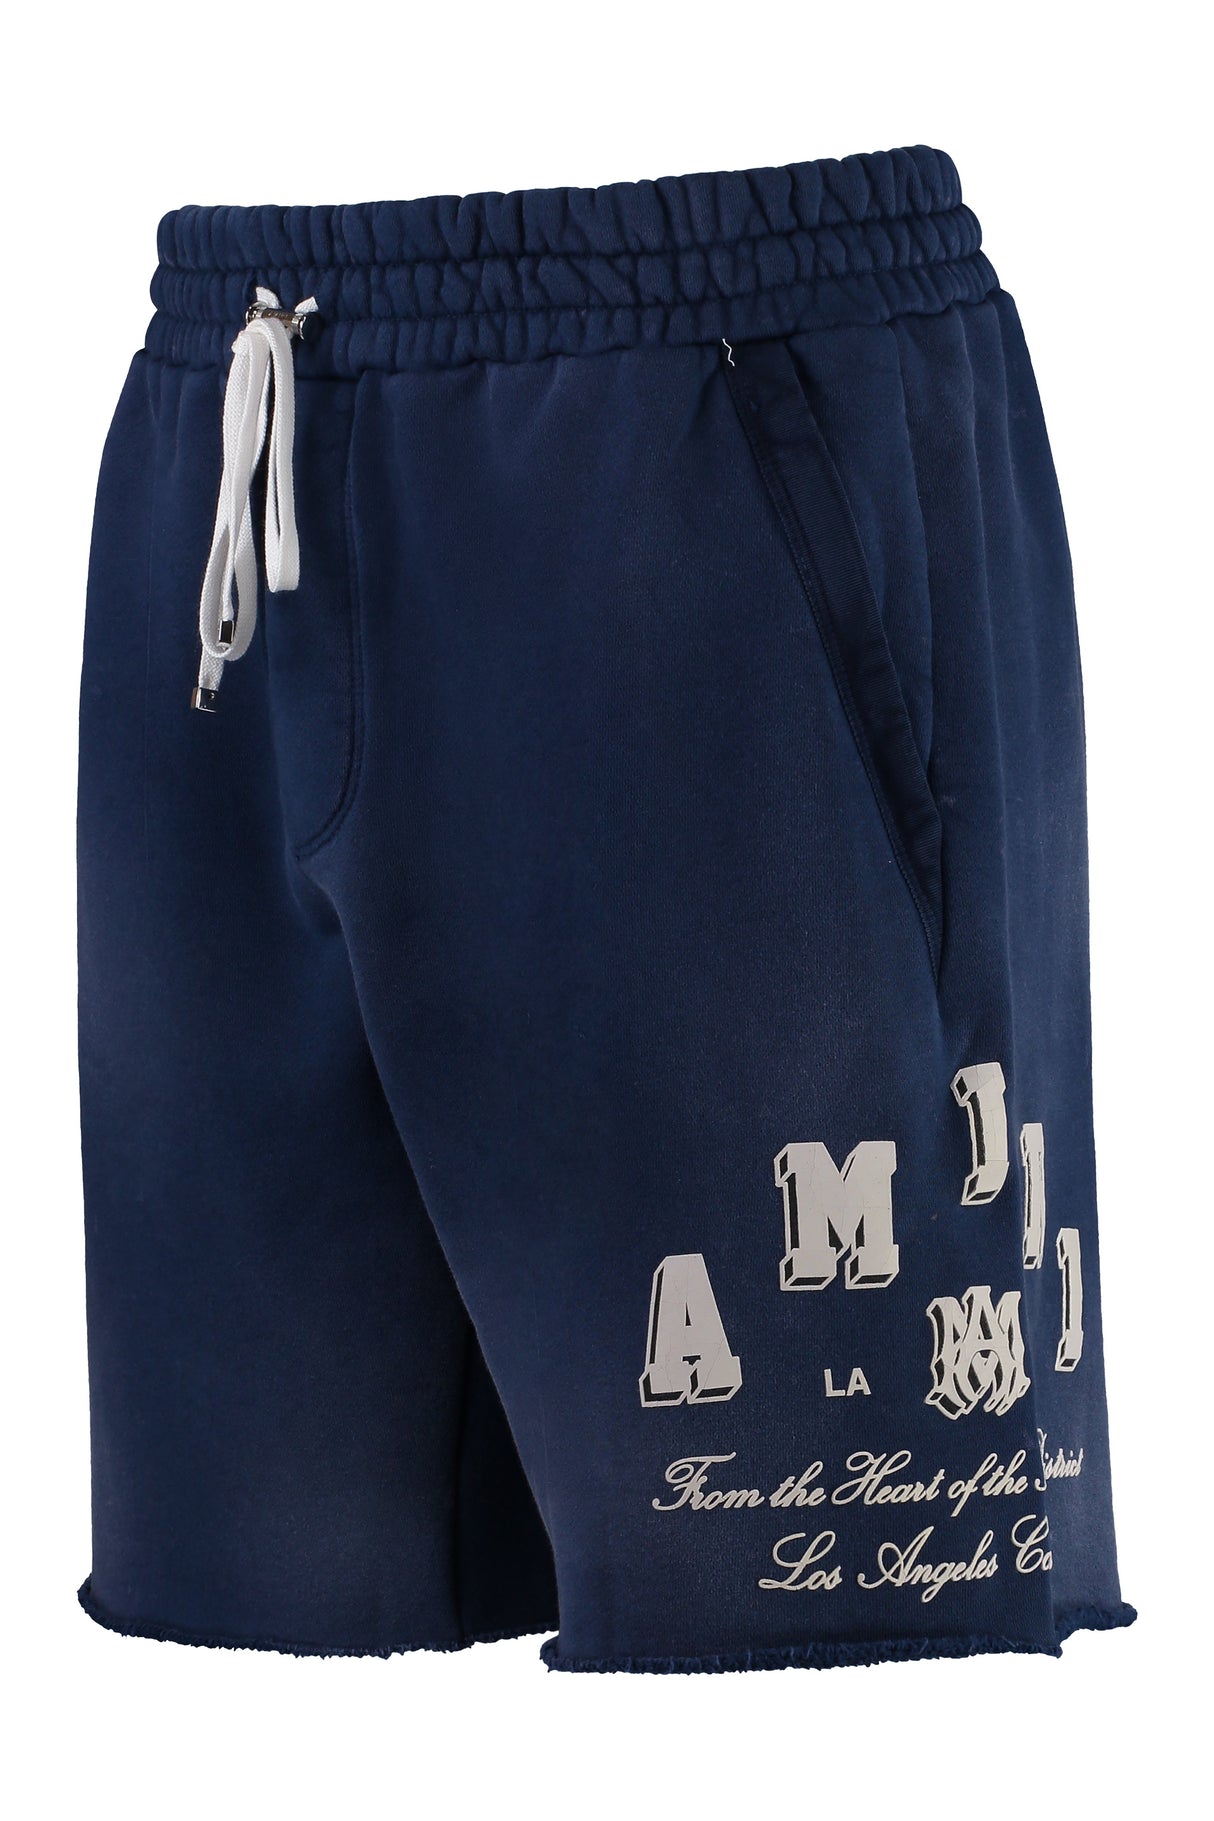 AMIRI Blue Cotton Bermuda Shorts for Men - FW23